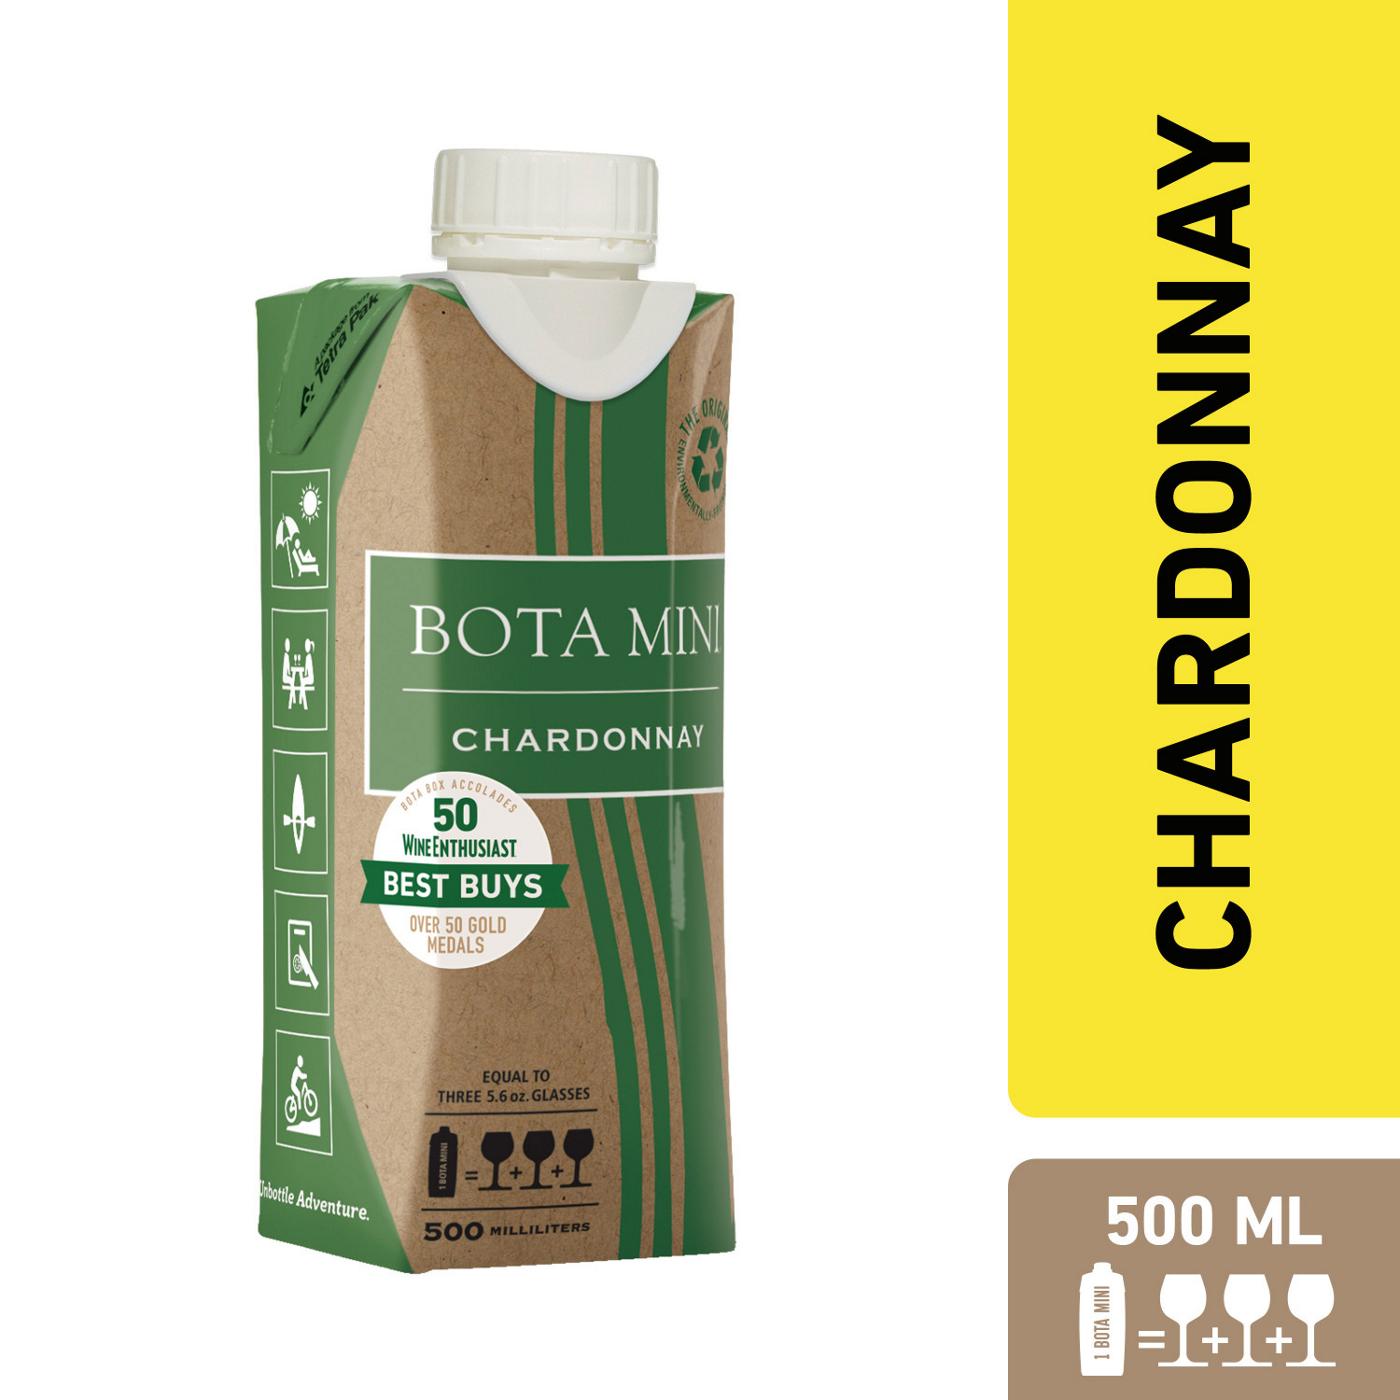 Bota Box Chardonnay; image 2 of 4